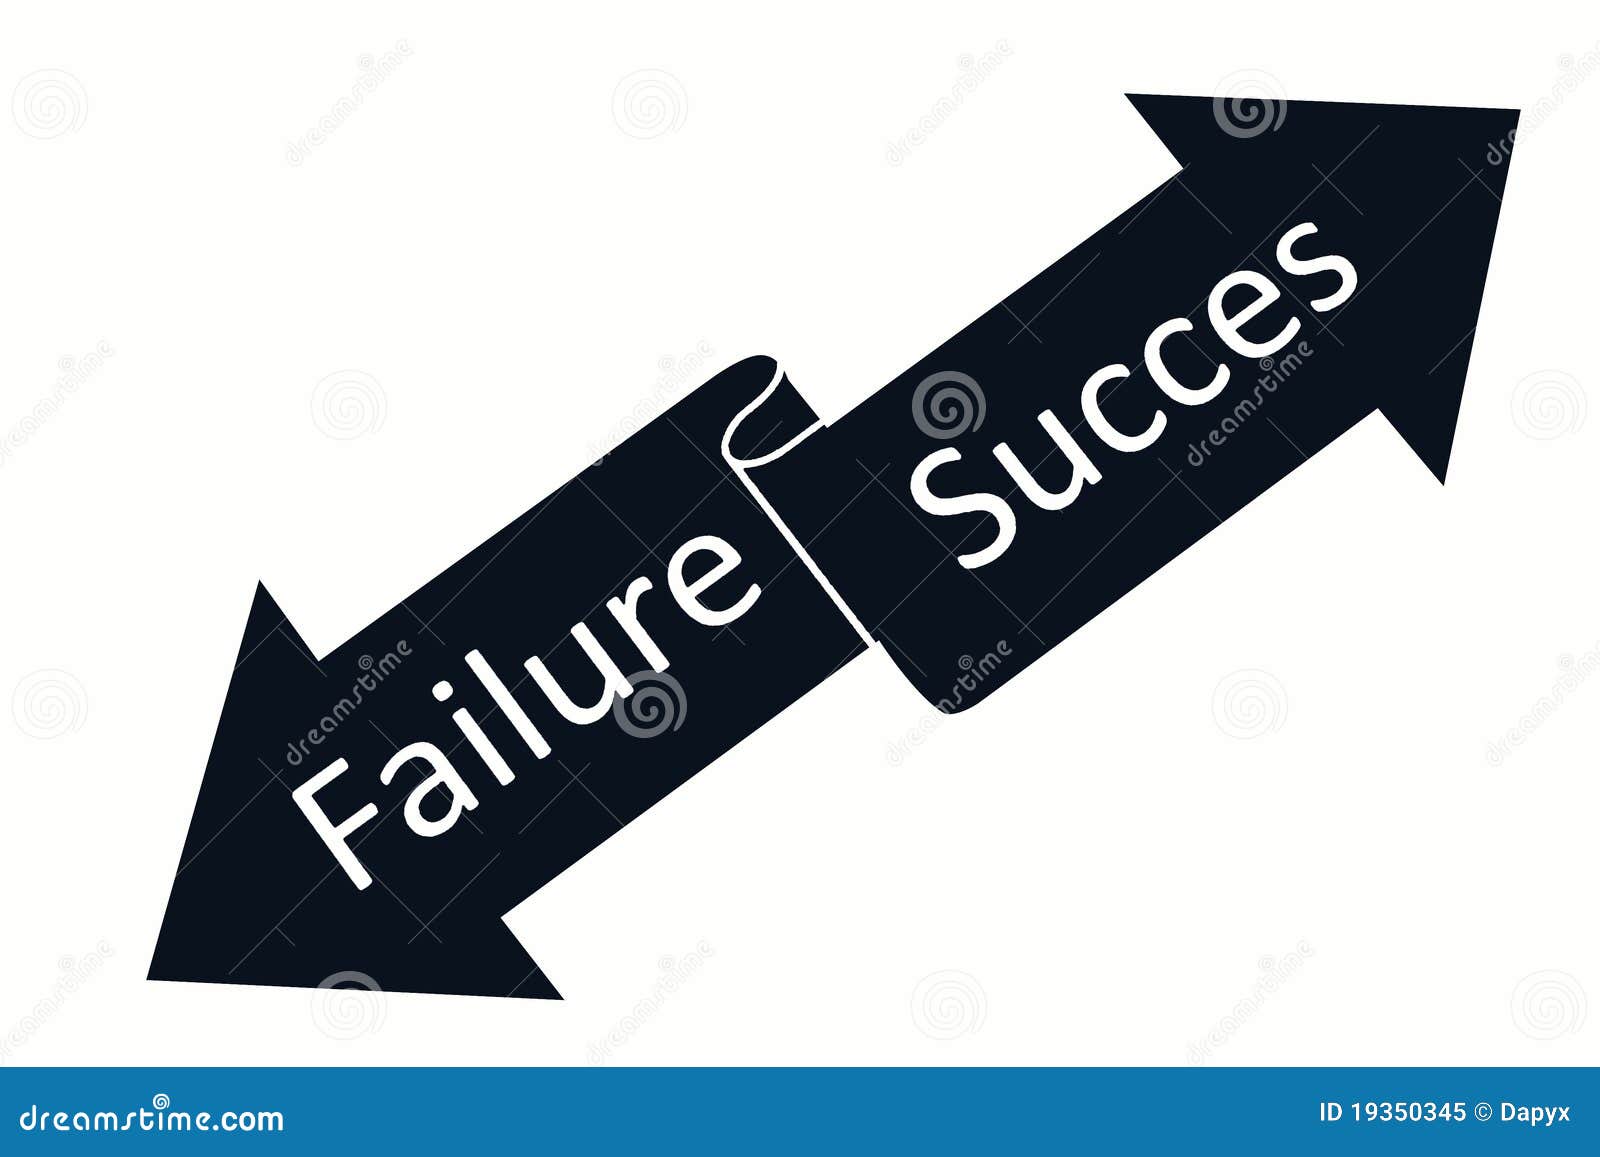 succes or failure